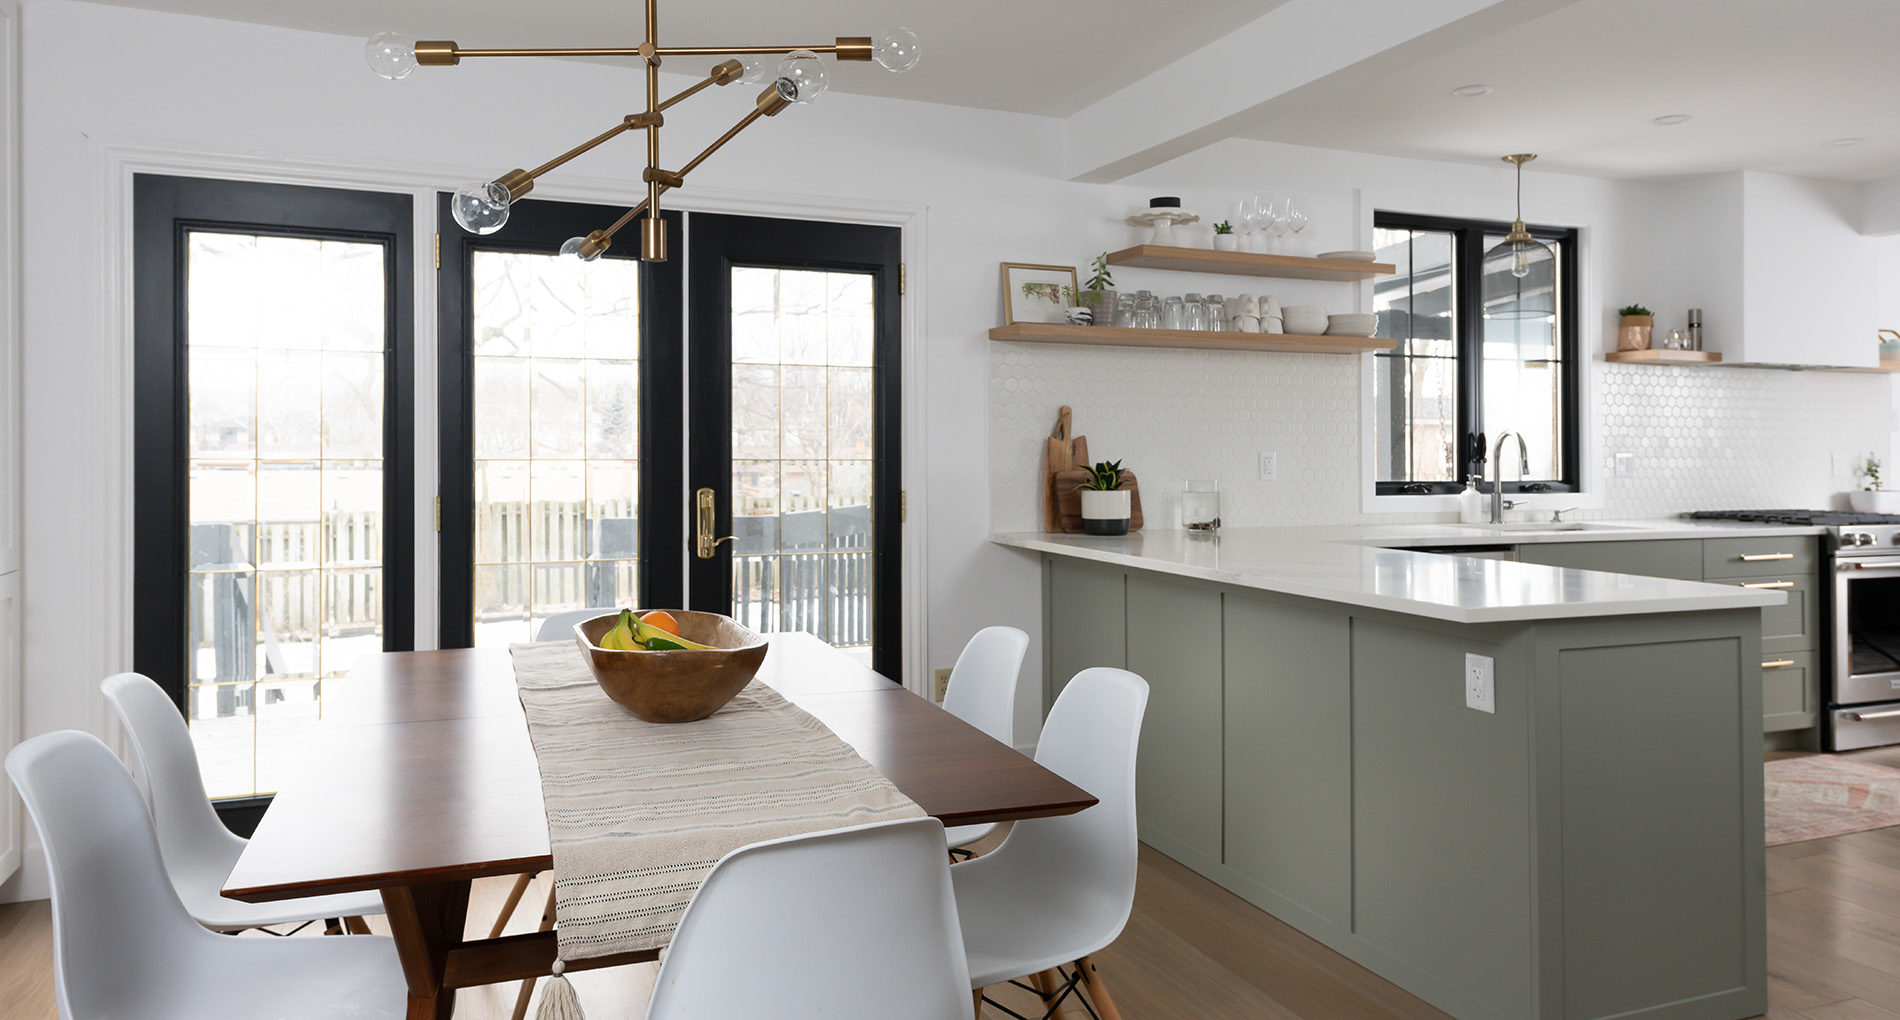 Kitchen Renovations & Design in Peterborough | Alair Homes in Peterborough